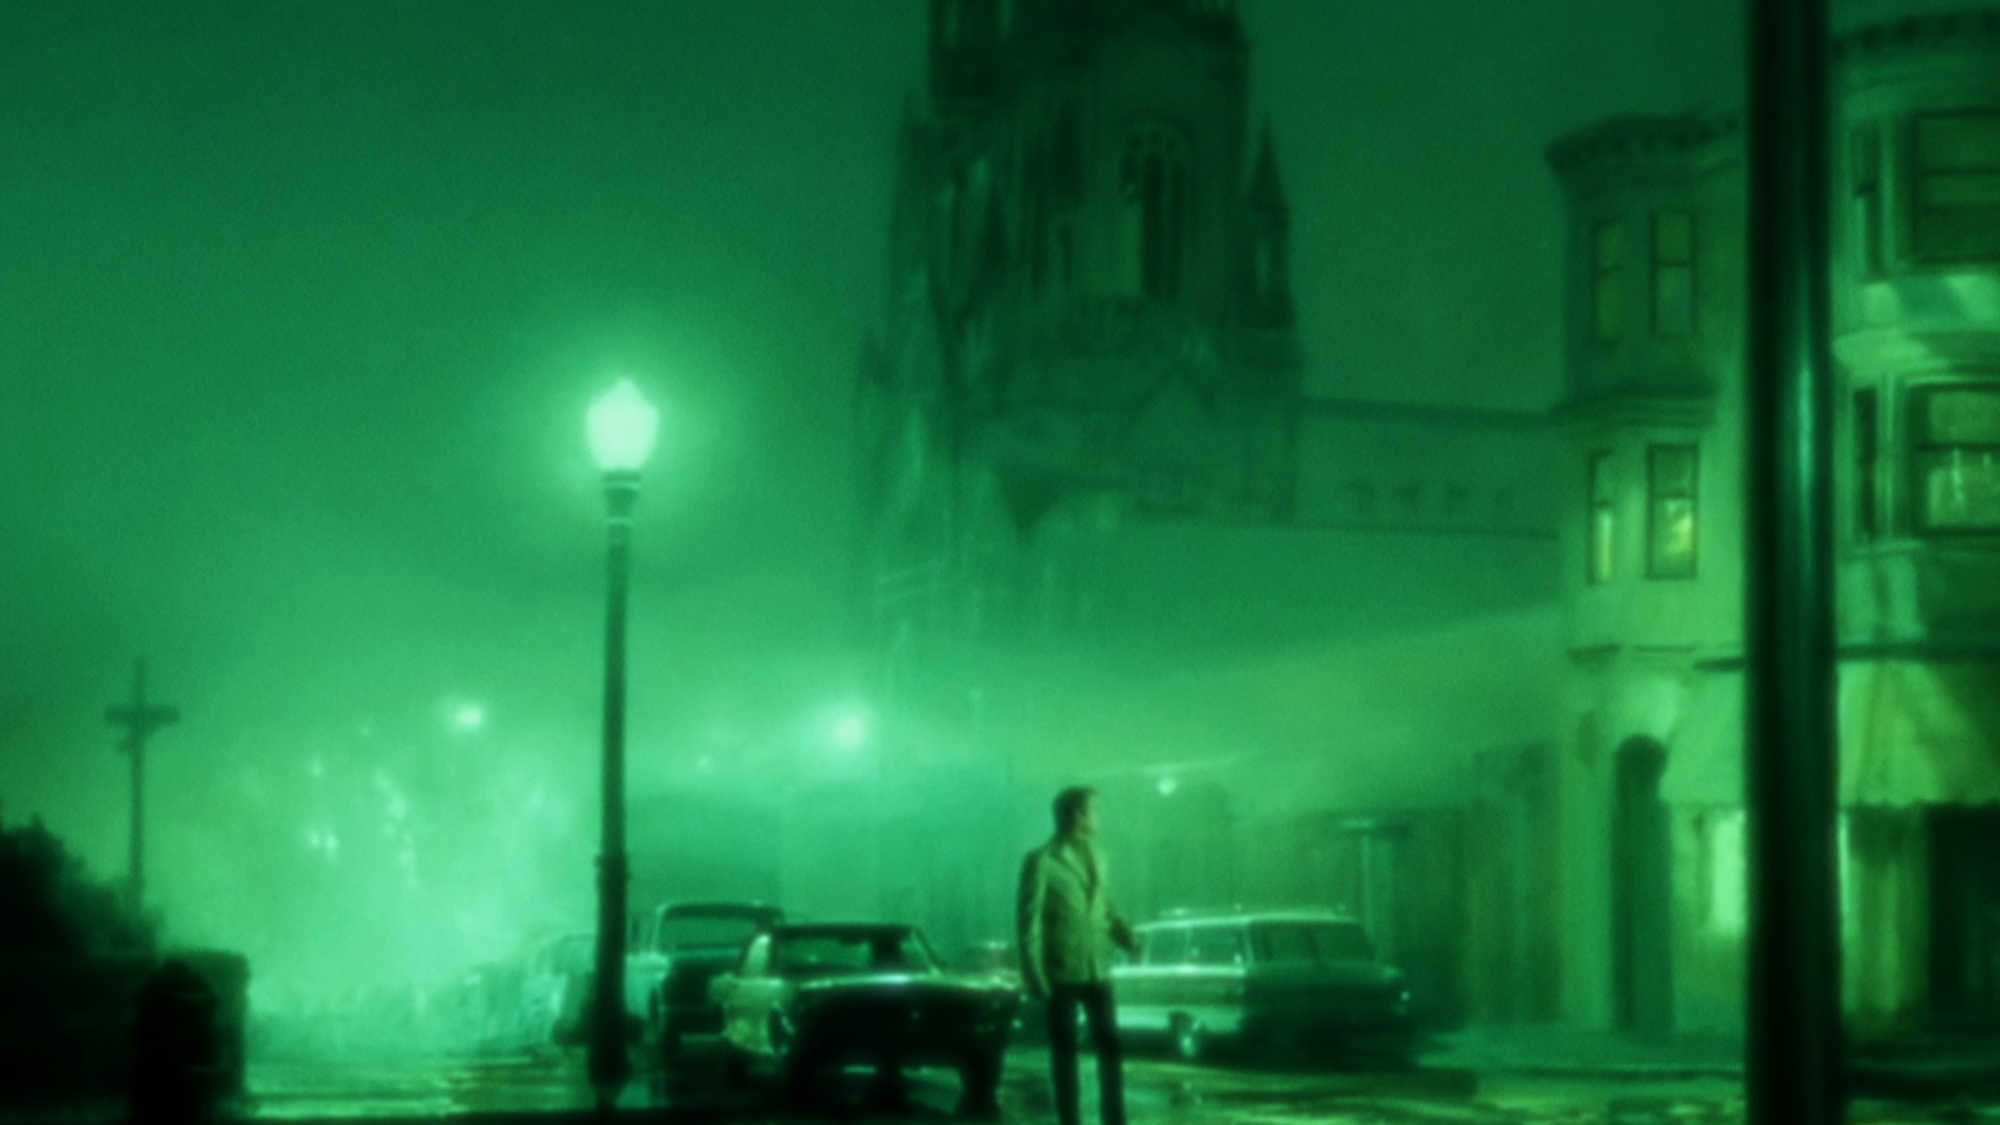 The Green Fog (image 1)